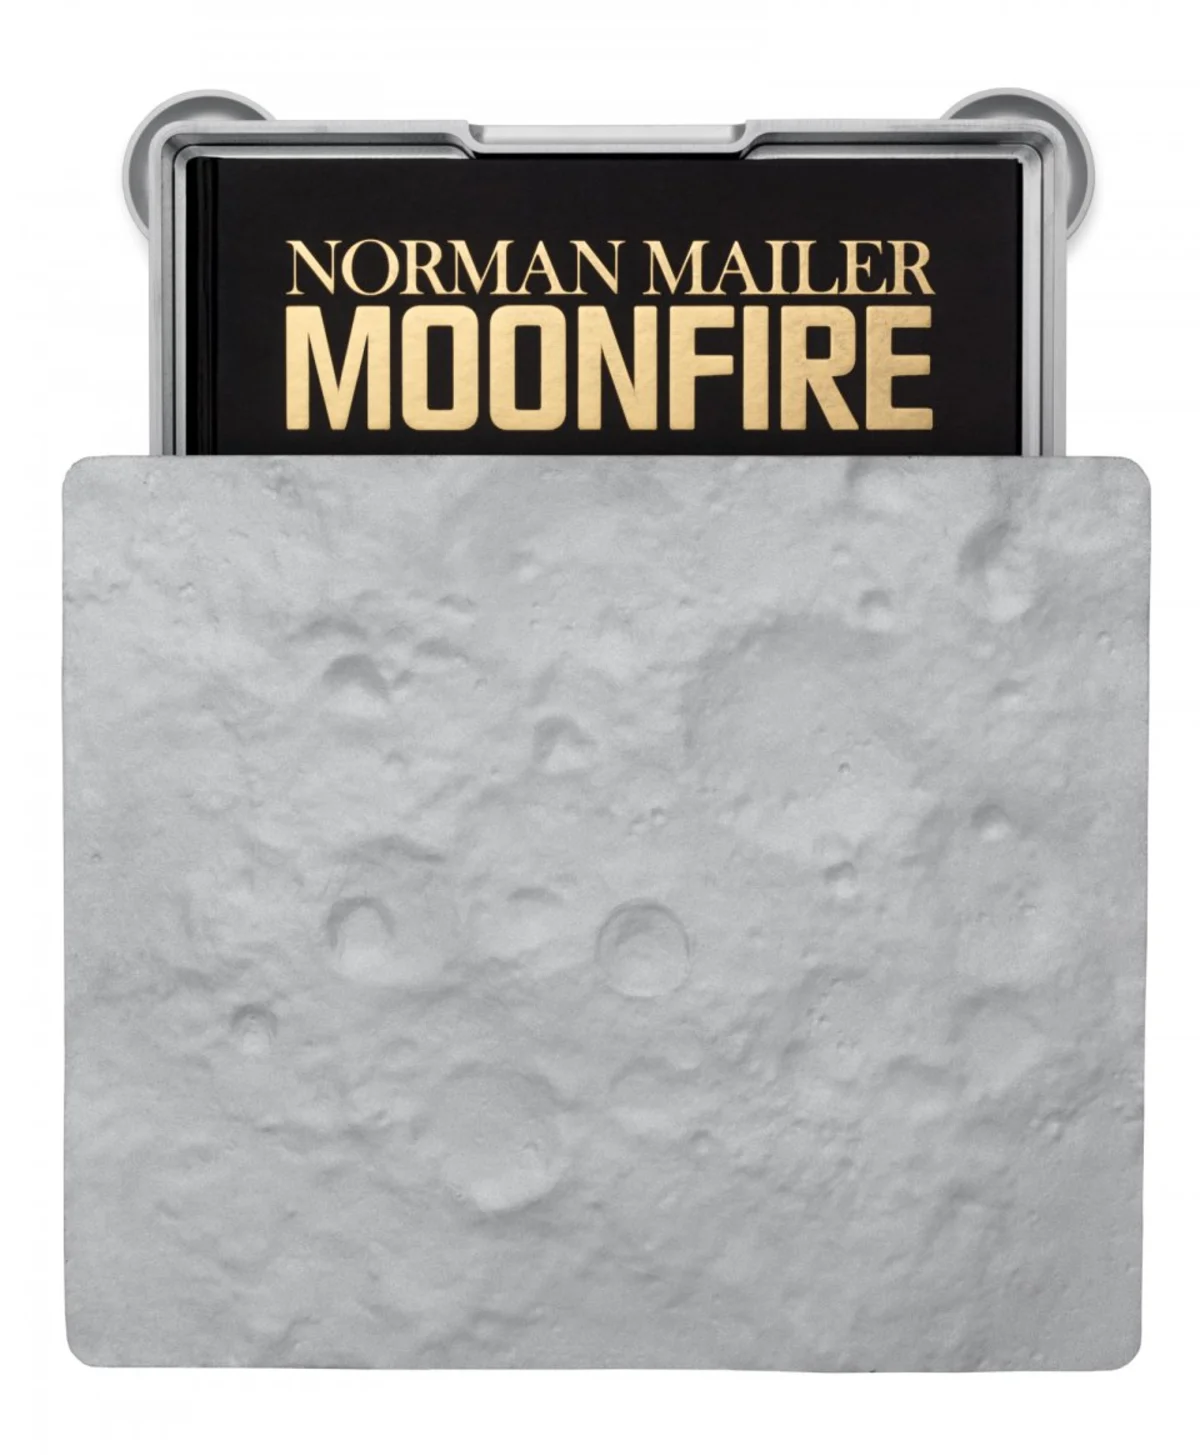 Norman Mailer, Marc Newson. MoonFire, Lunar Rock Edition No. 1,968 ‘NWA 4936’